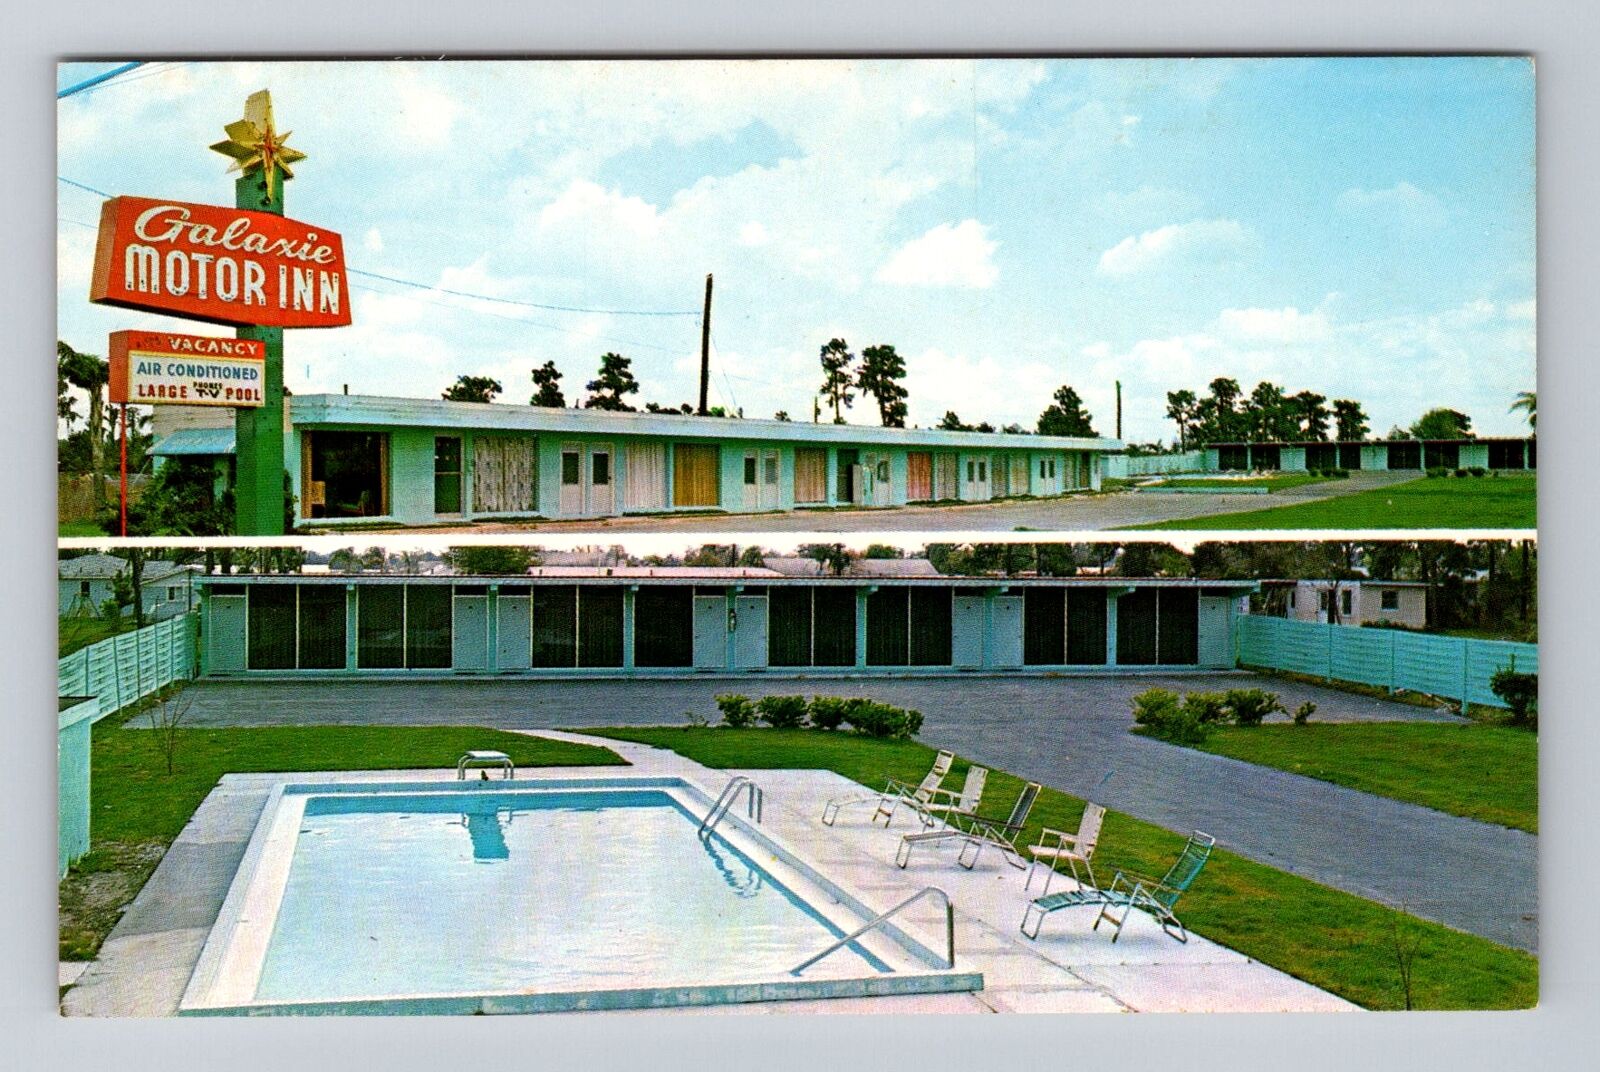 Orlando FL-Florida, Galaxie Motor Inn Advertising, Vintage Souvenir Postcard